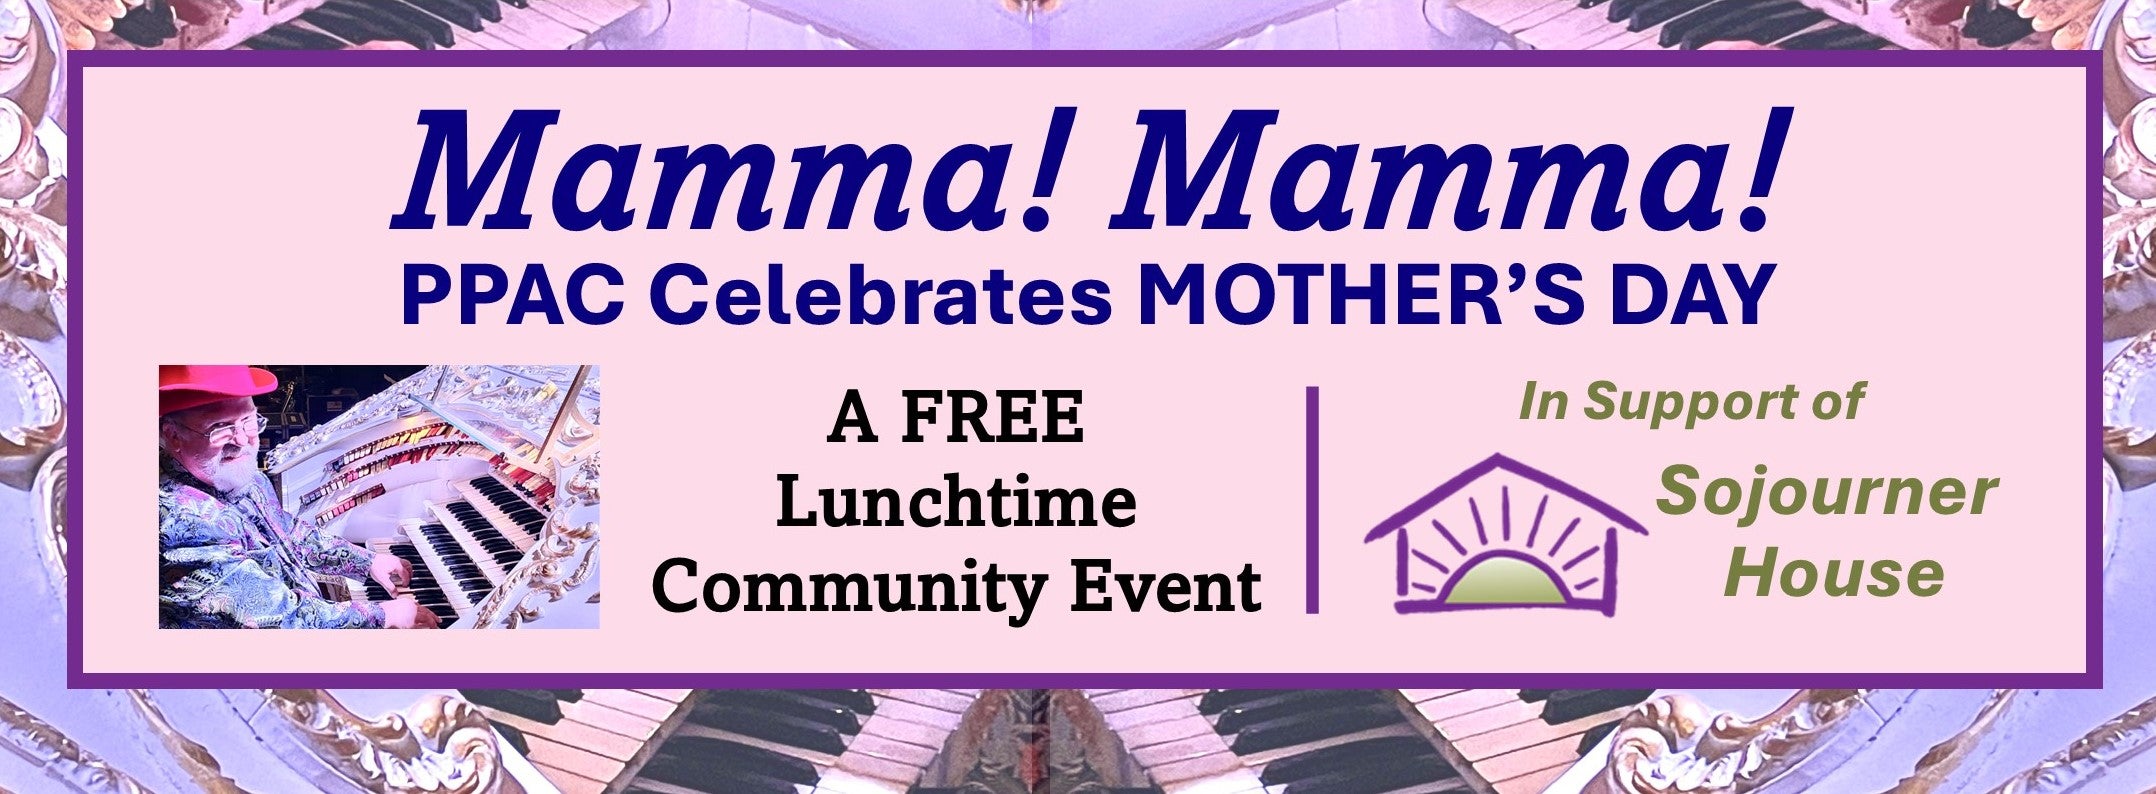 Mamma! Mamma! | PPAC Celebrates Mother's Day